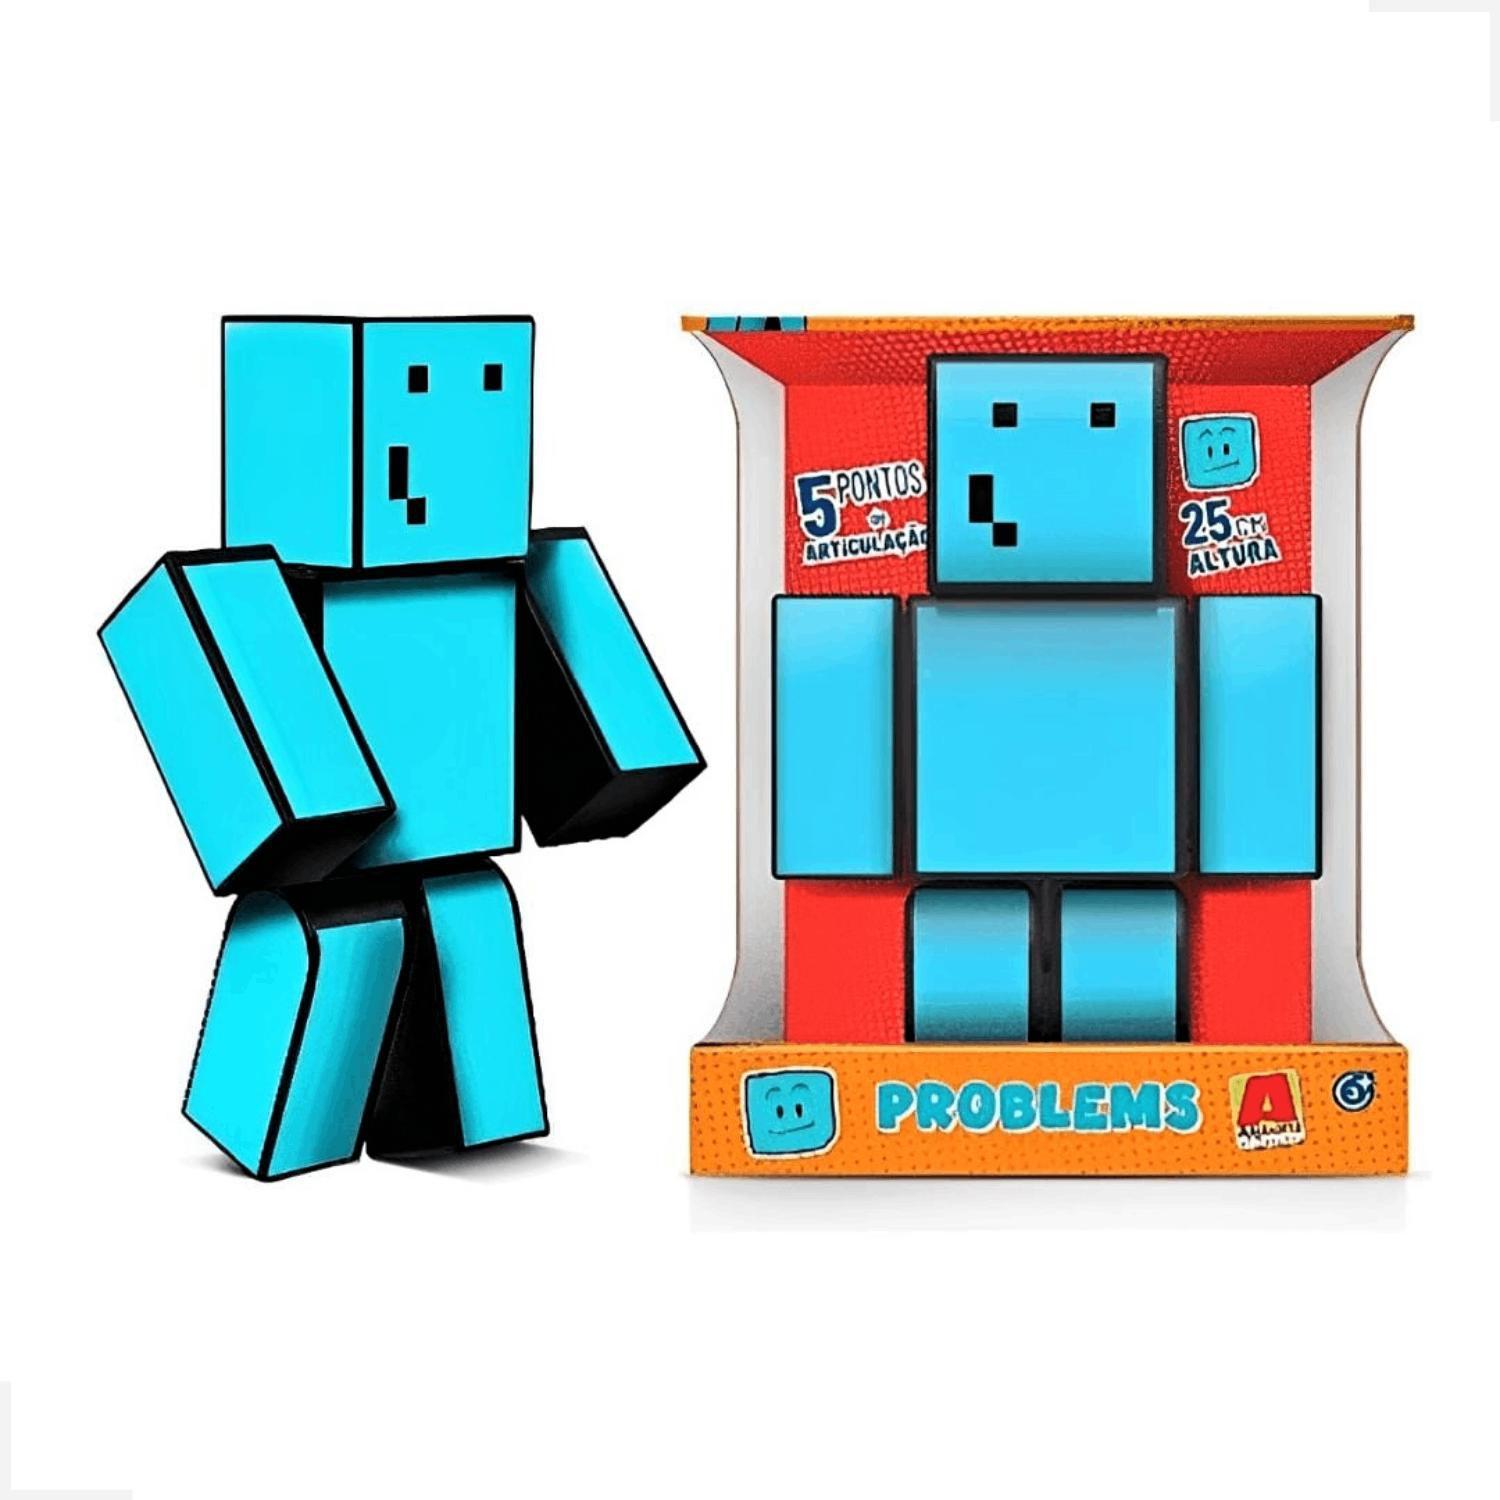 Boneco Zoom Turma do Problems - Grande - 35cm- Minecraft - Streamers-   - Algazarra